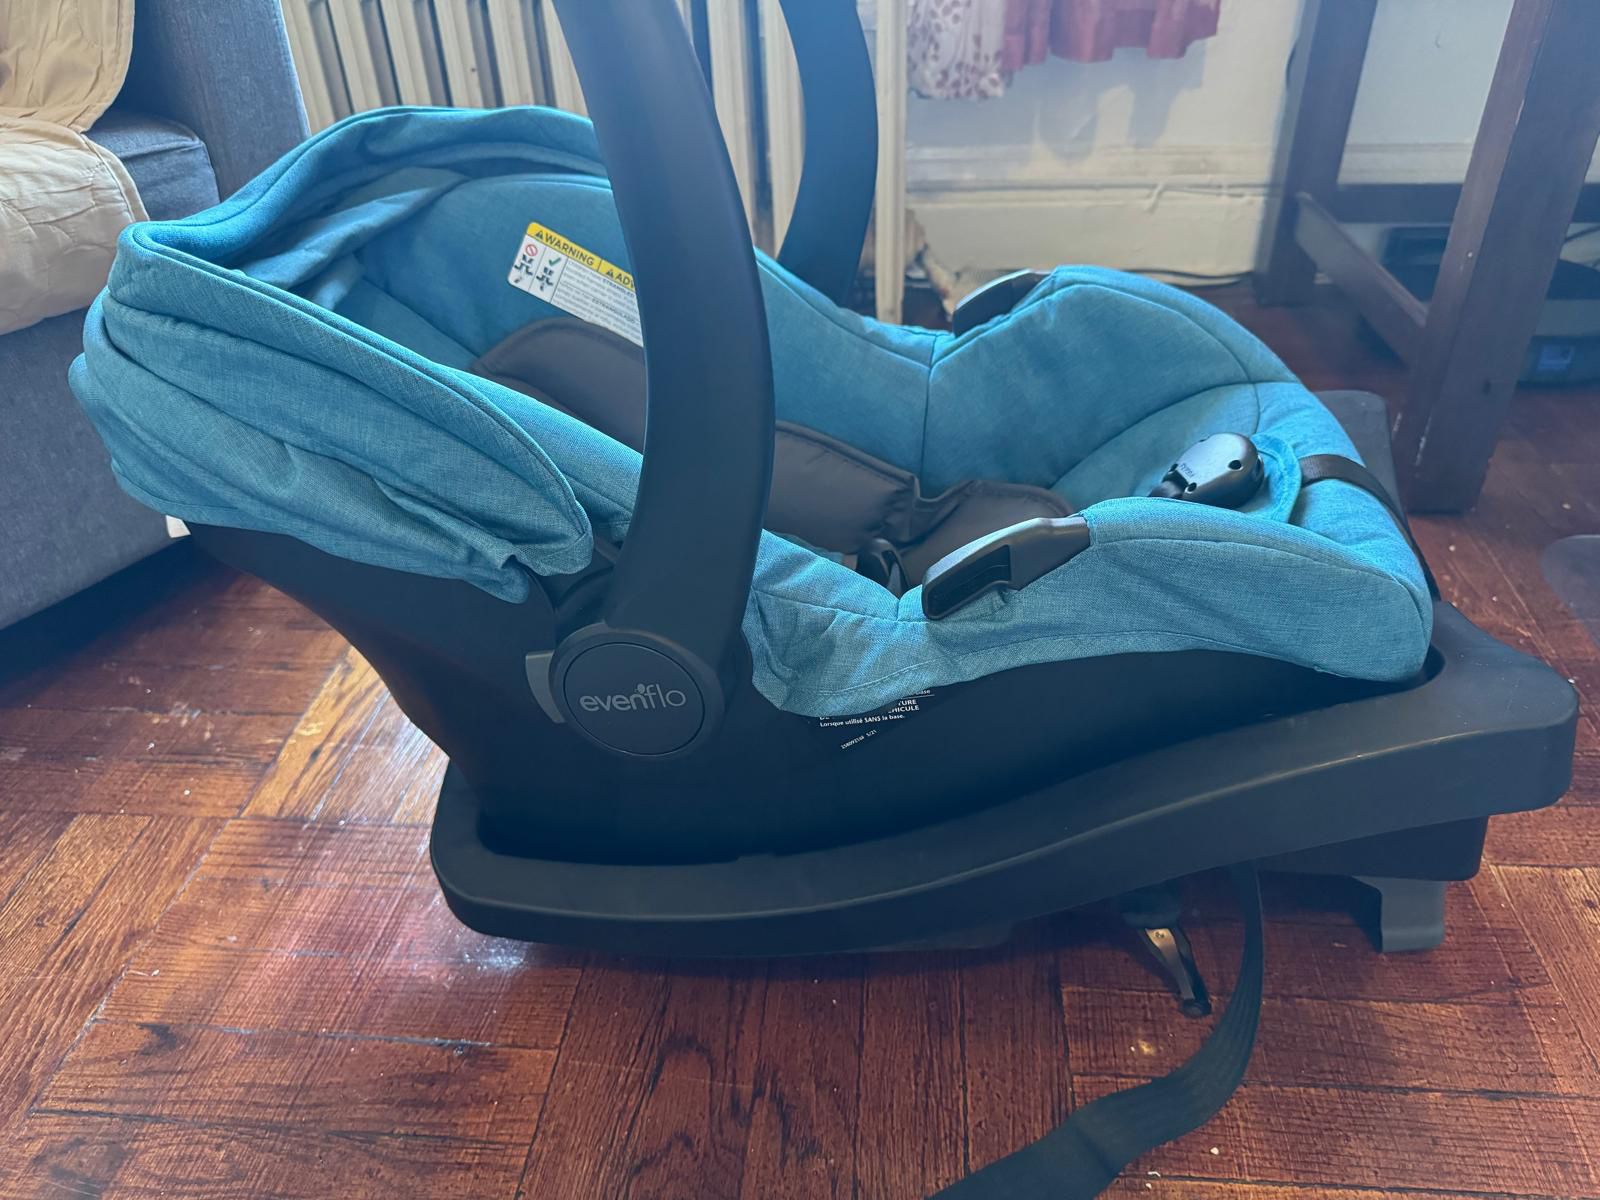 Evenflo Infant Car Seat